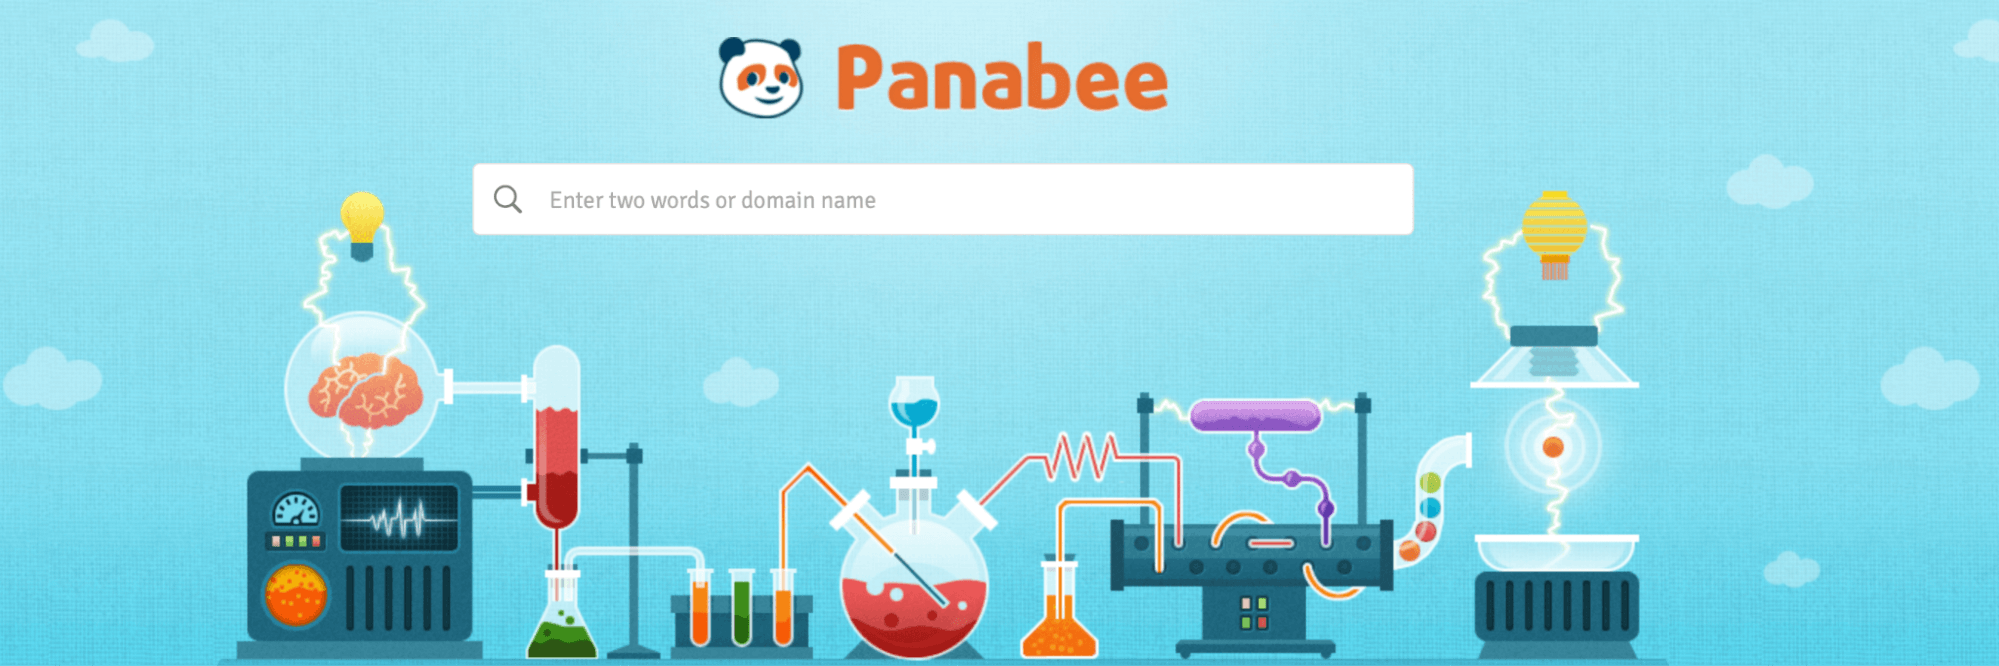 Panabee’s domain generator tool